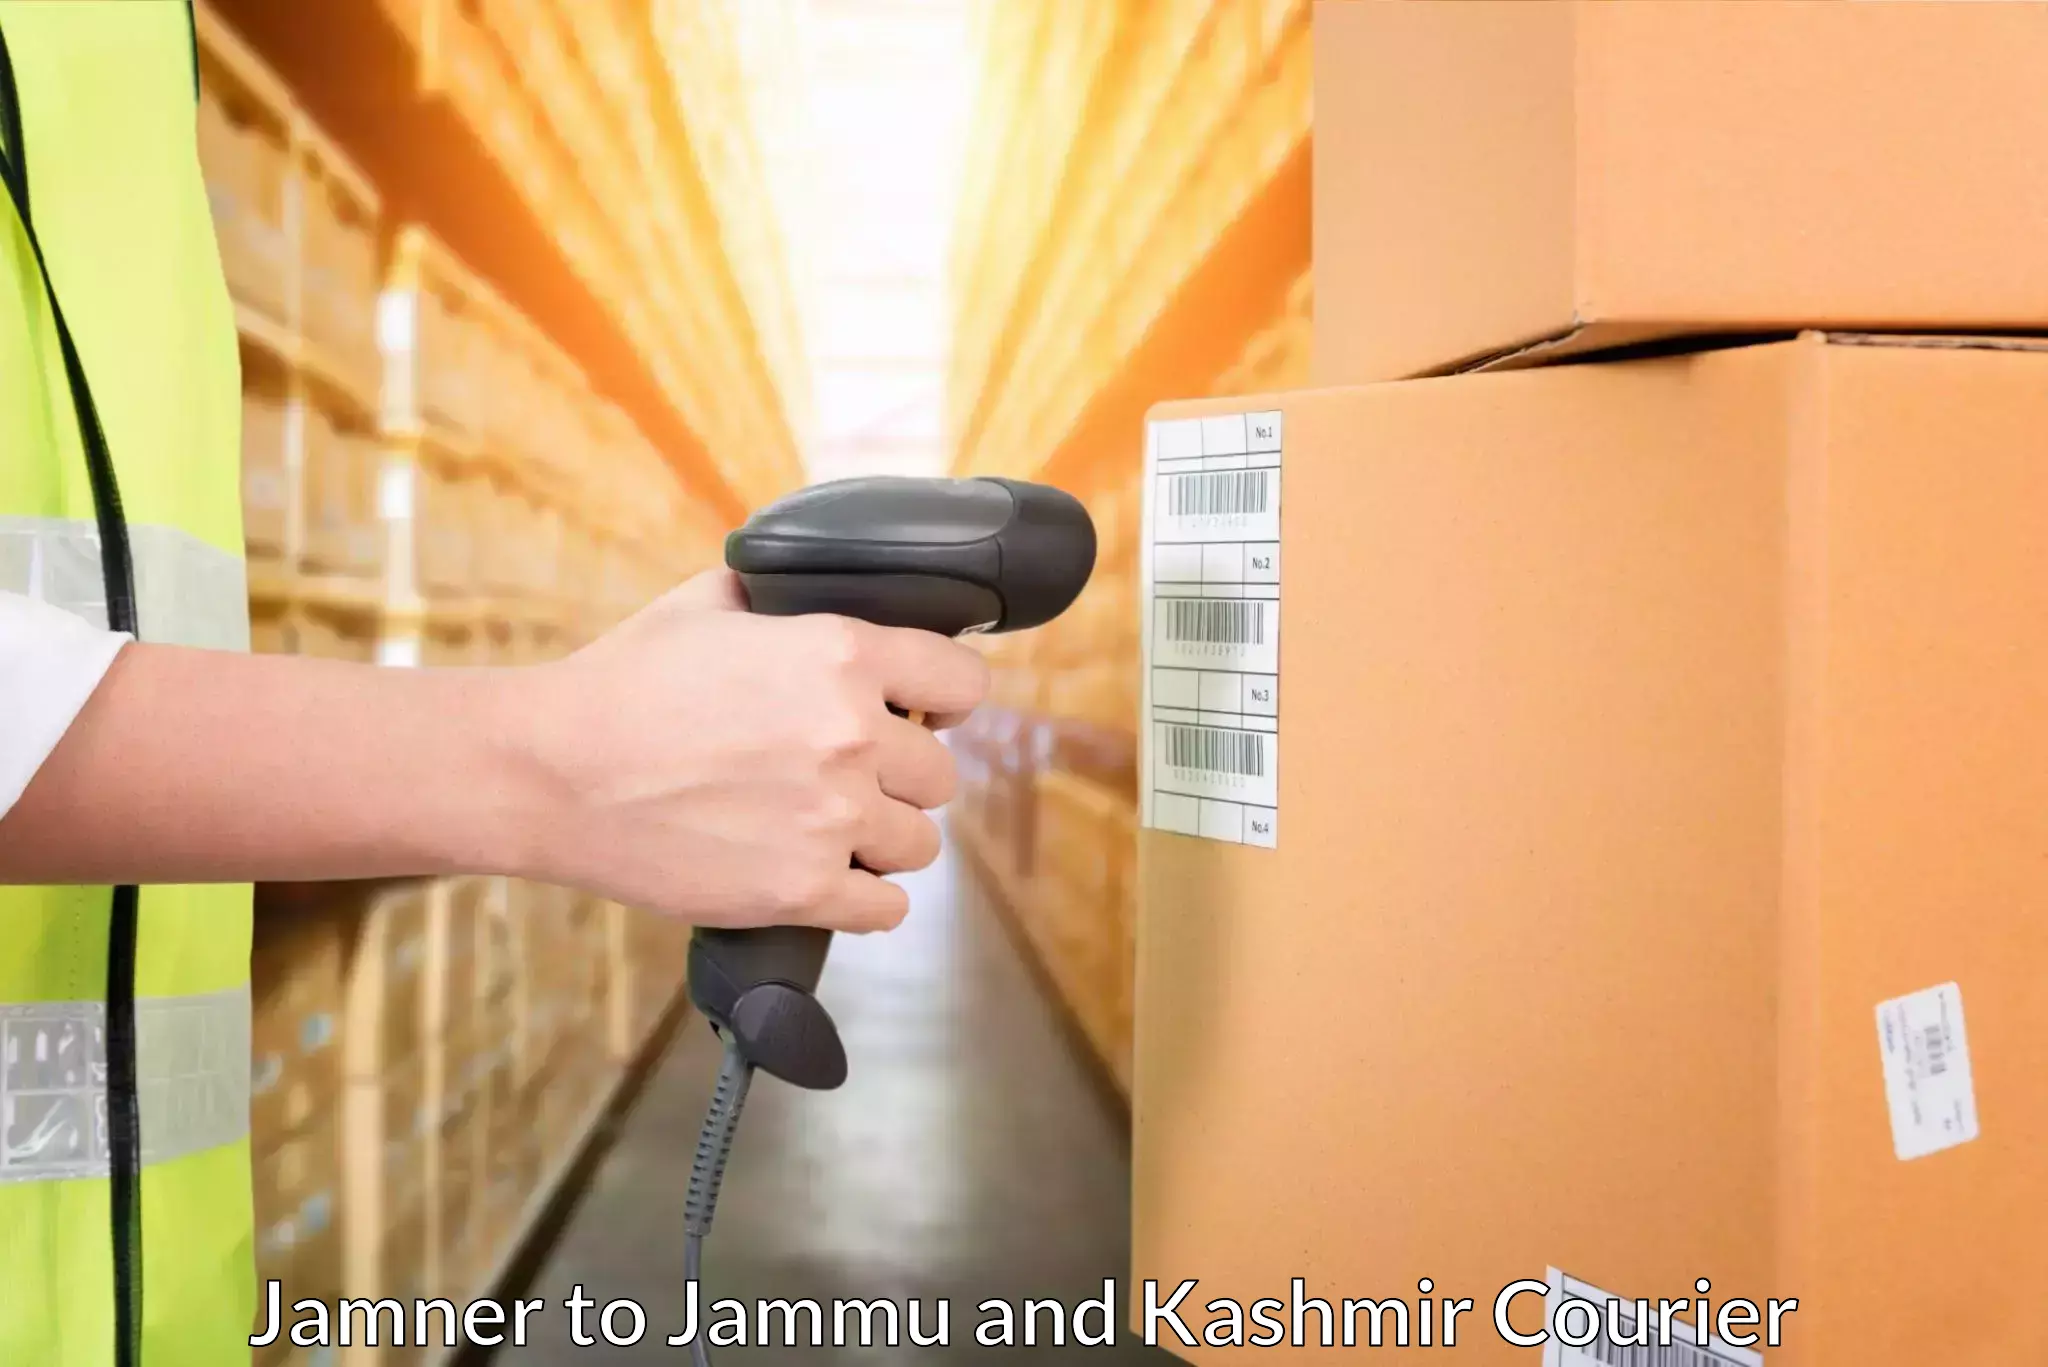 Rapid freight solutions Jamner to Kupwara